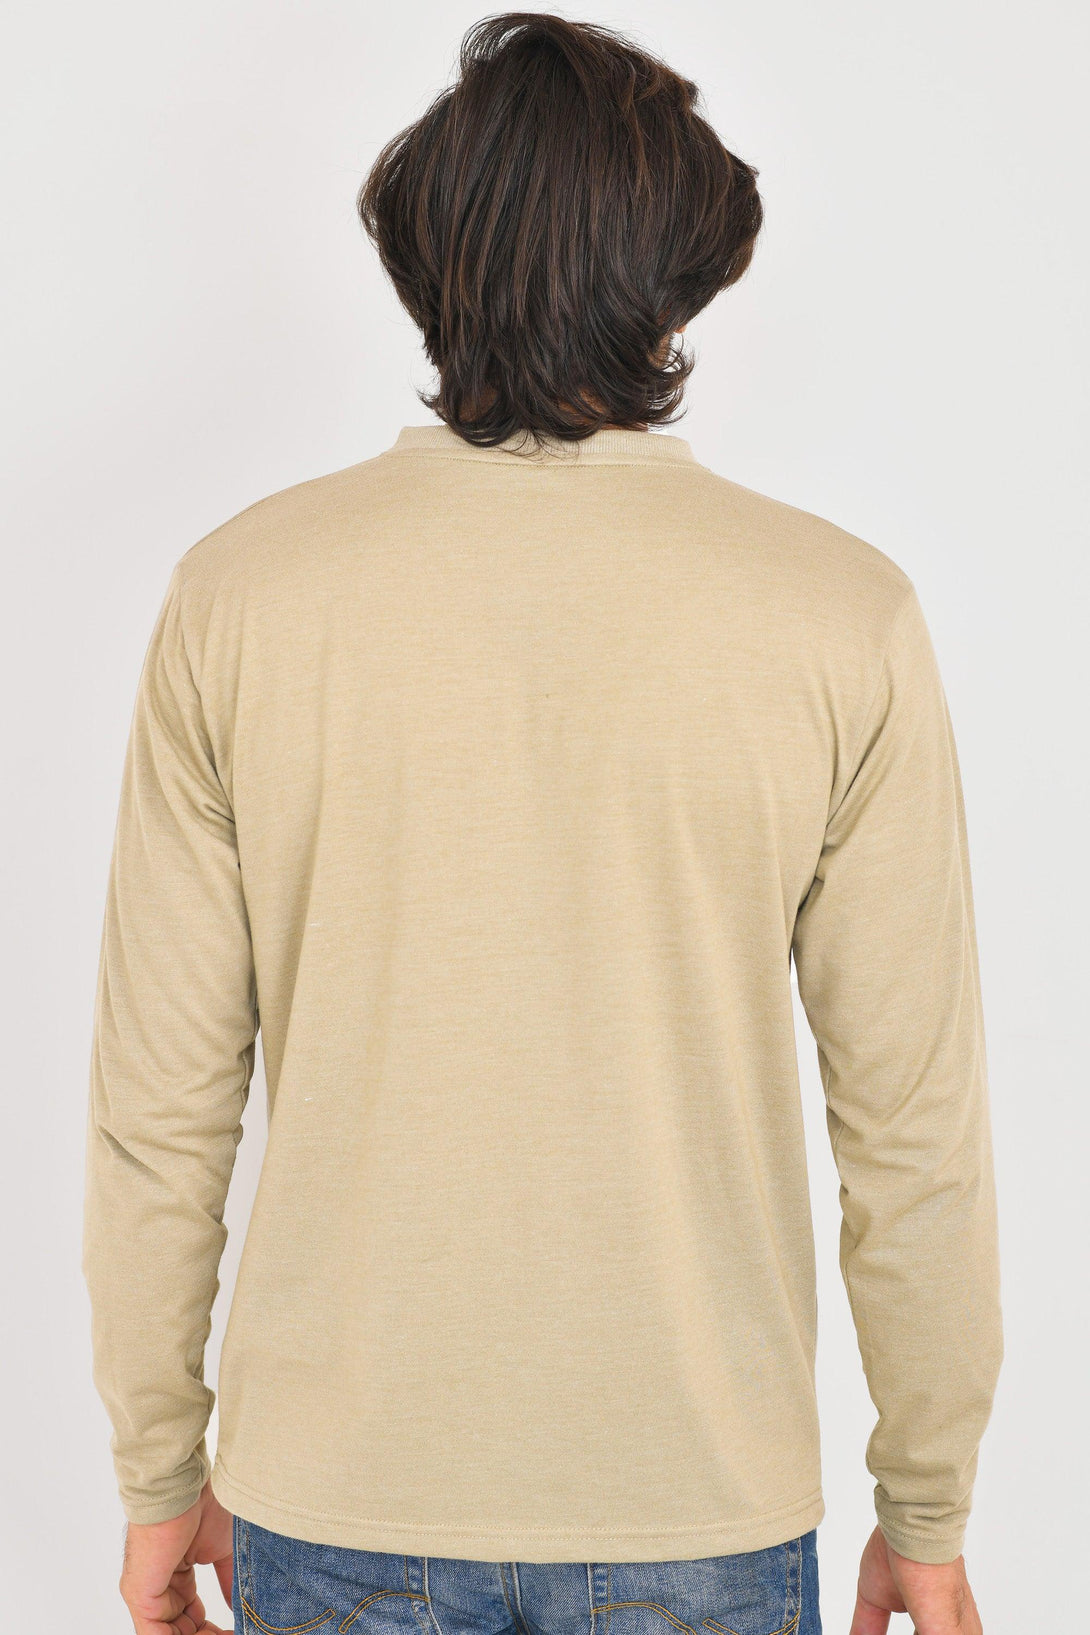 V-Neck Long Sleeve T-Shirts | NAVY MELANGE-STONE-CHARCOAL-HUNTER GREEN - Pack of 4 - FTS